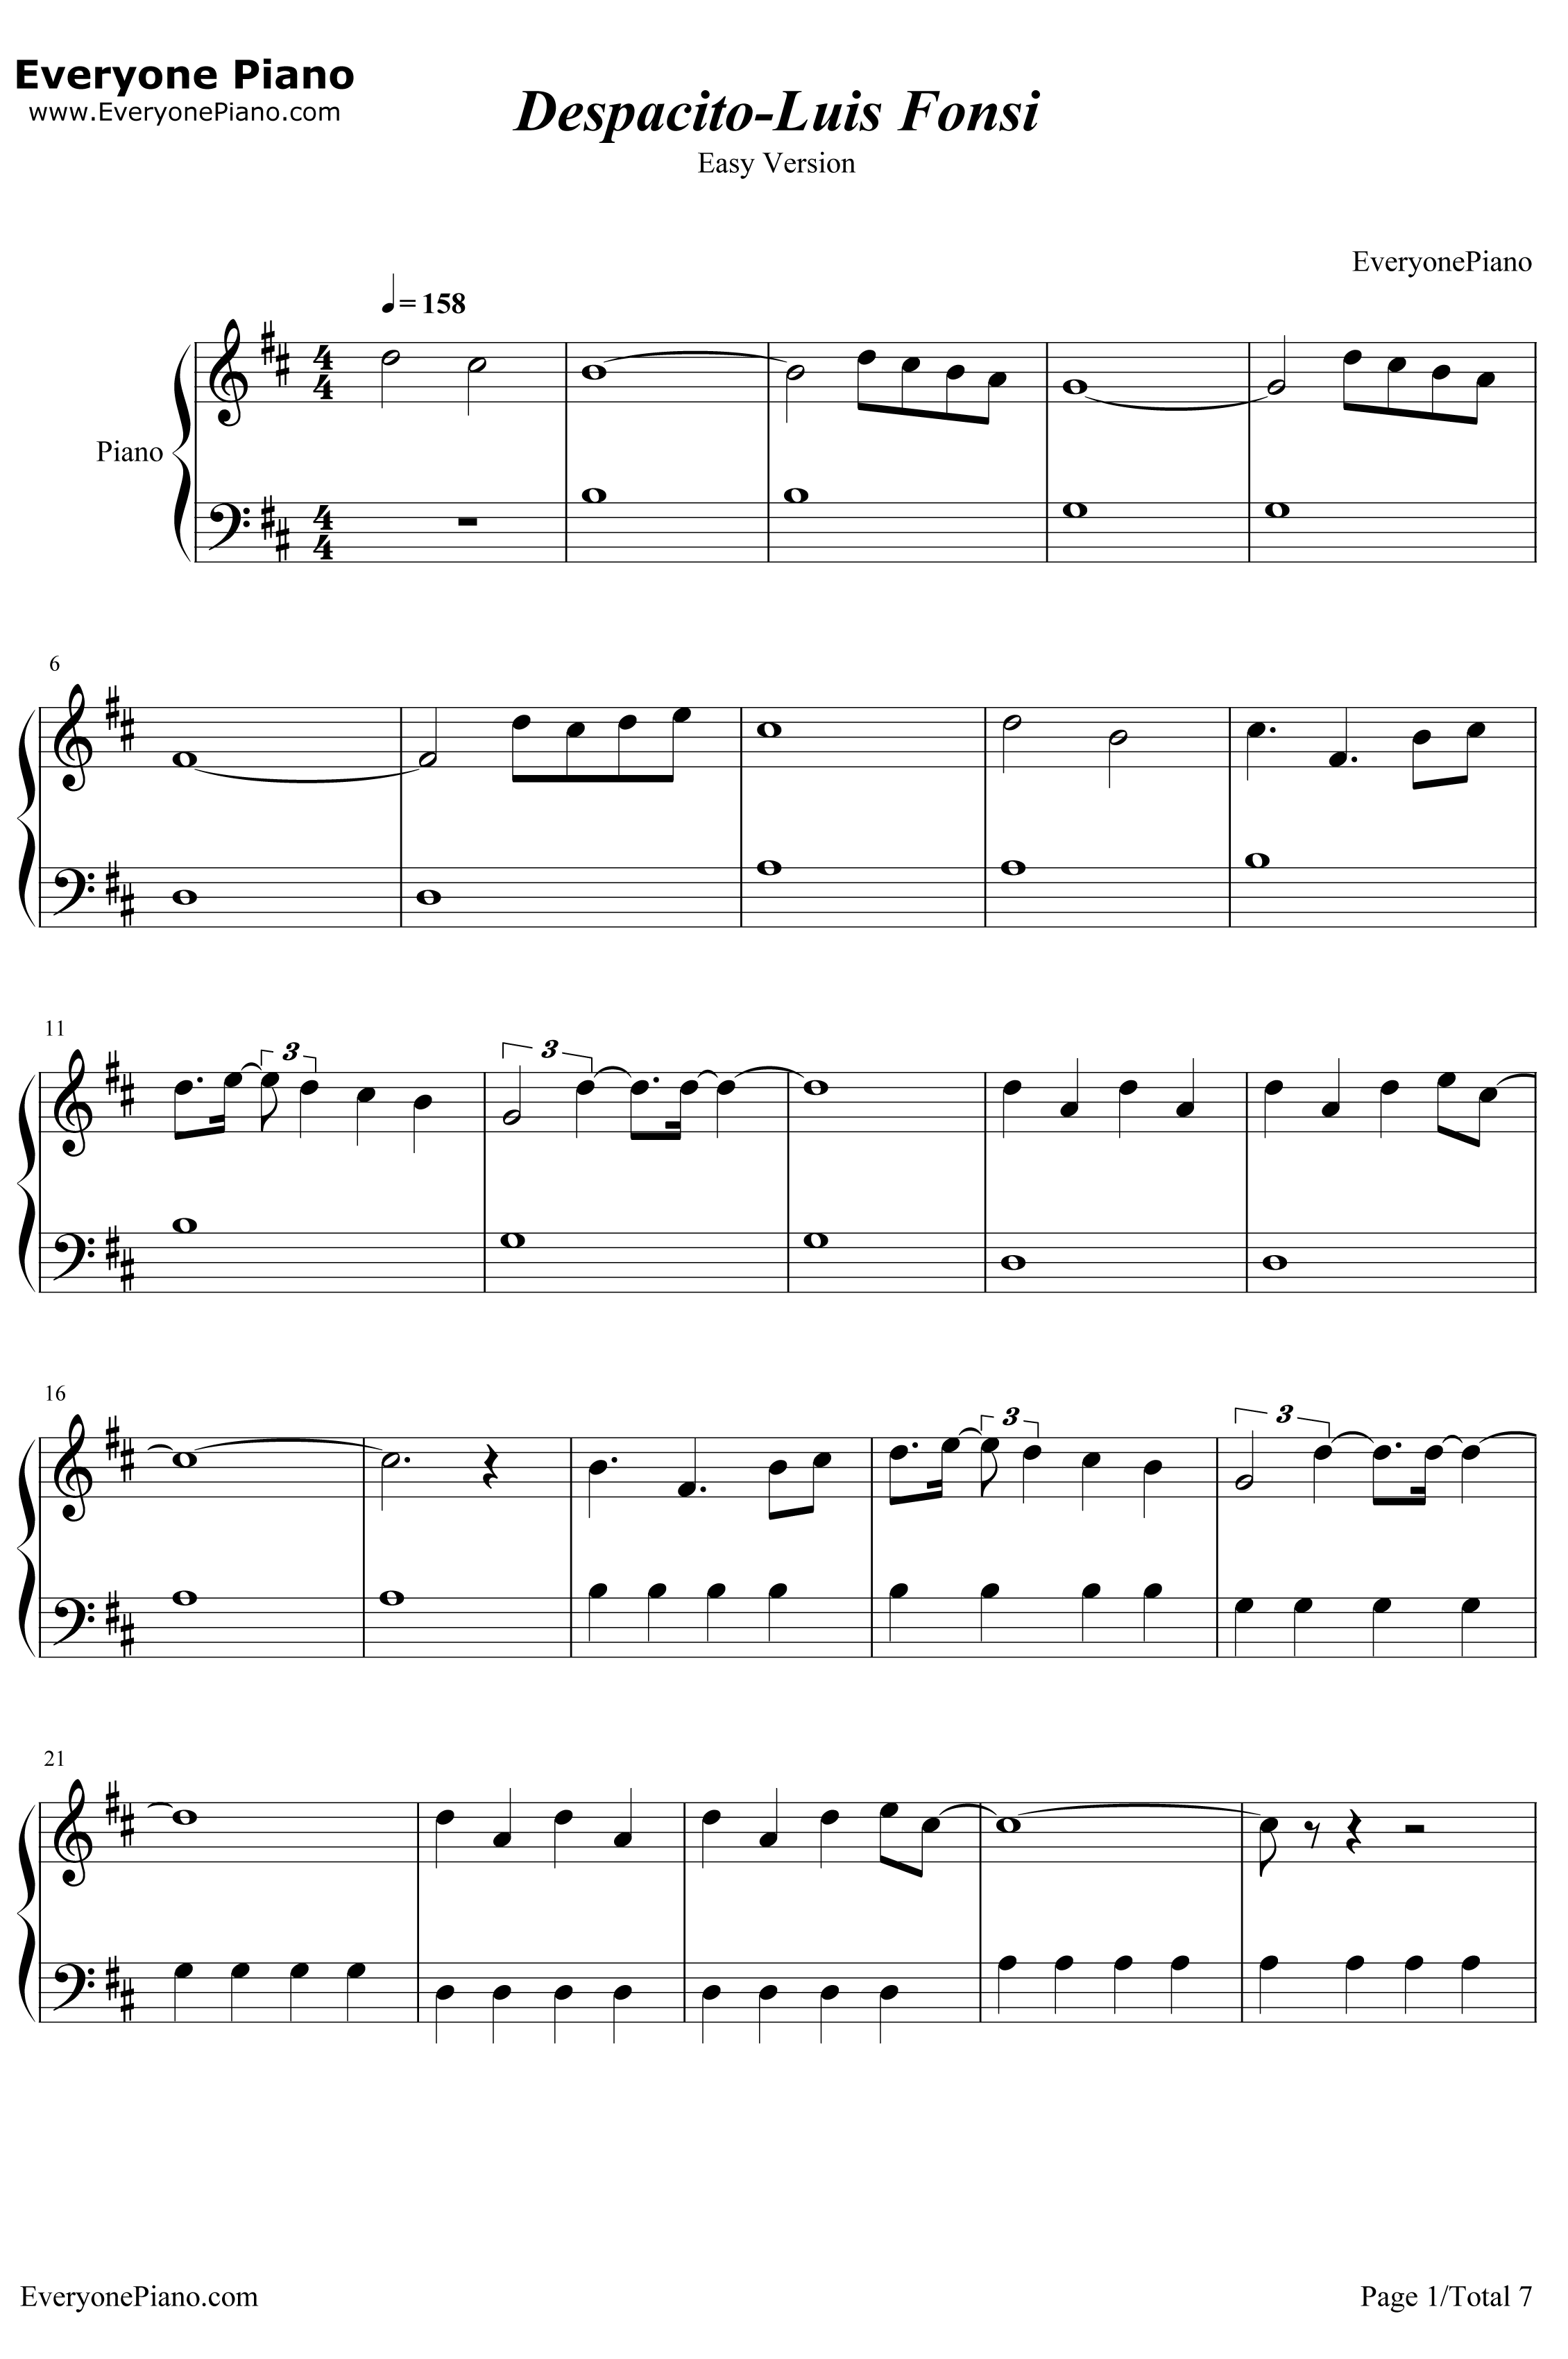 Despacito简单版钢琴谱 -LuisFonsi1